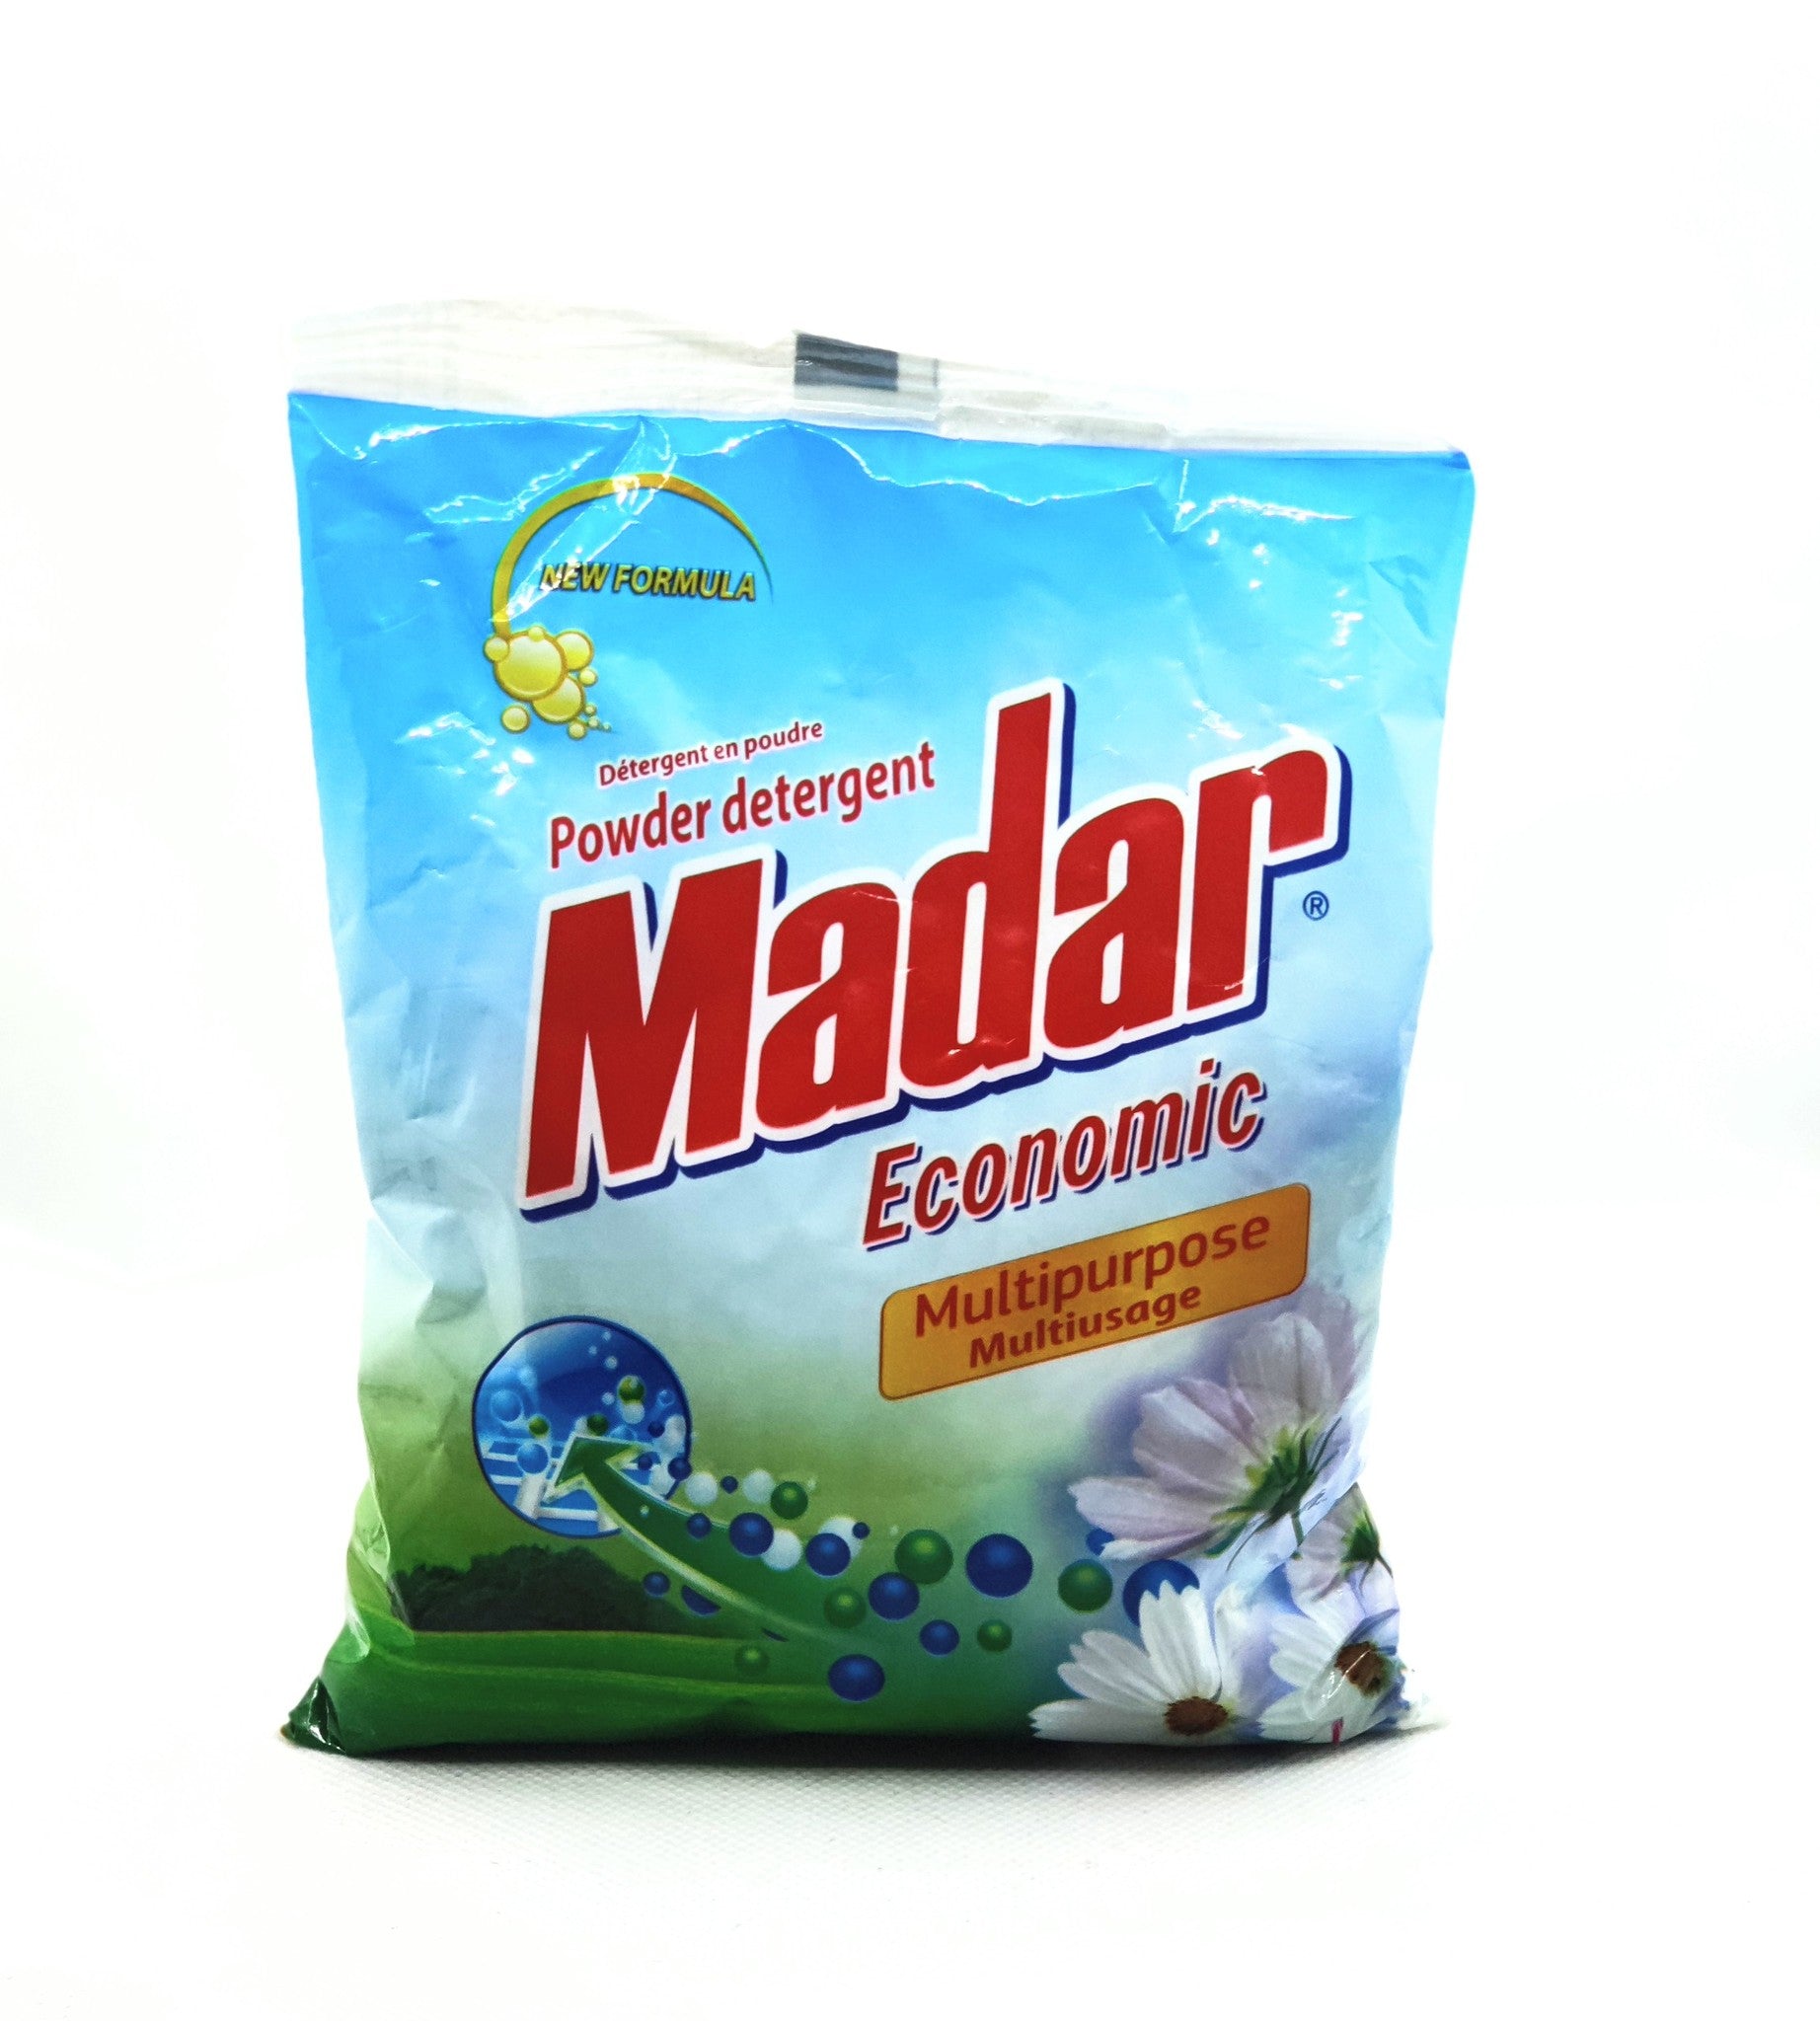 170 gram bag of madar multipurpose powder detergent